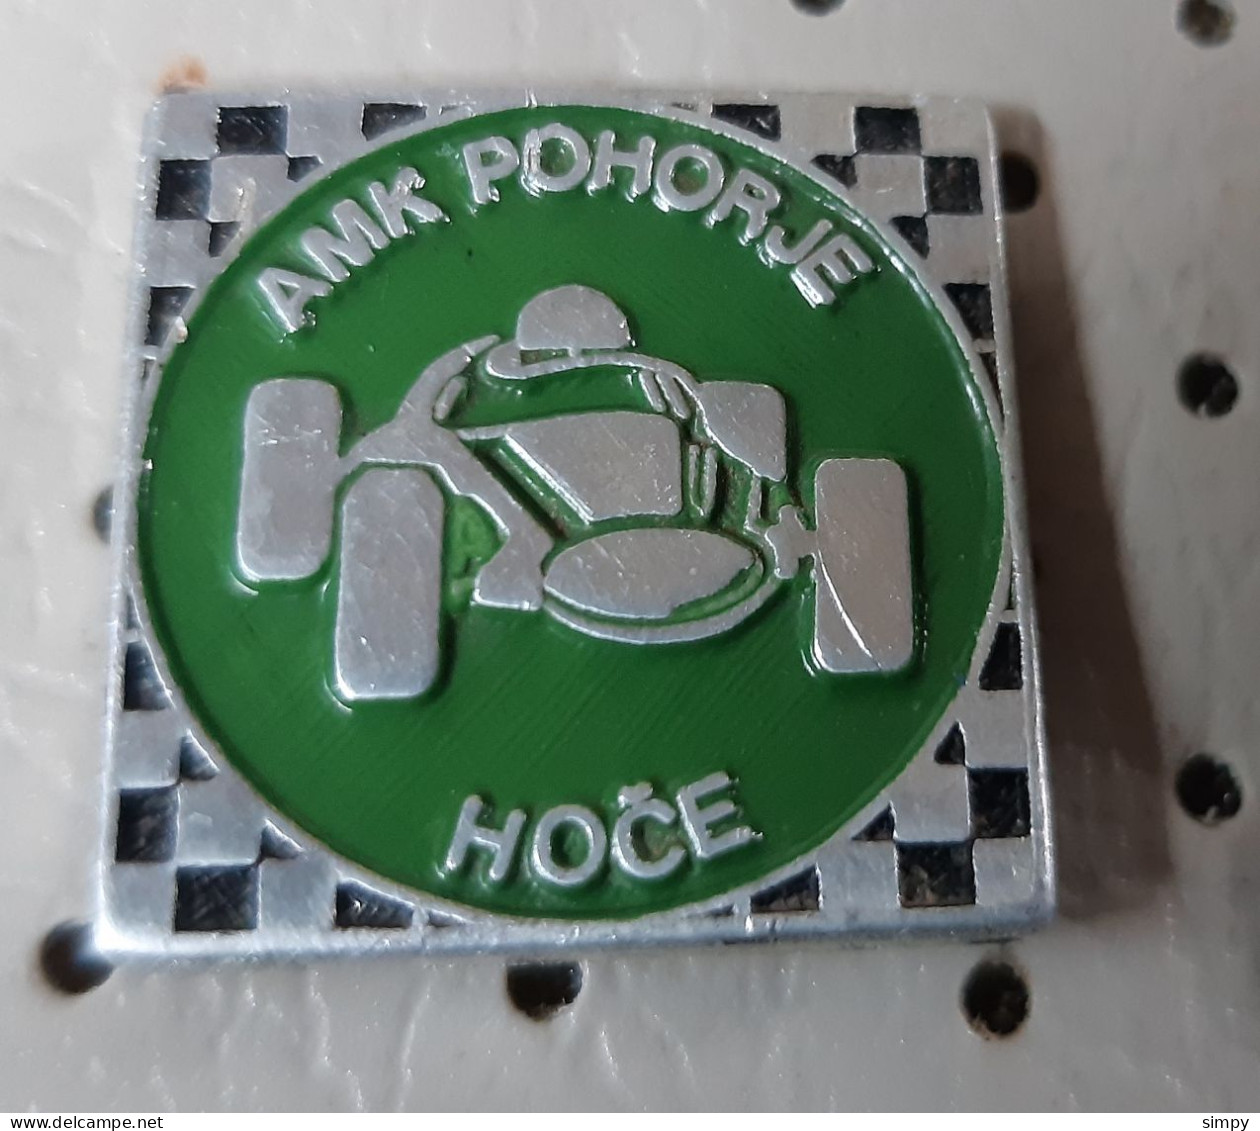 Auto Moto Club AMD Pohorje Hoce Racing Car Slovenia Pin - Rallye